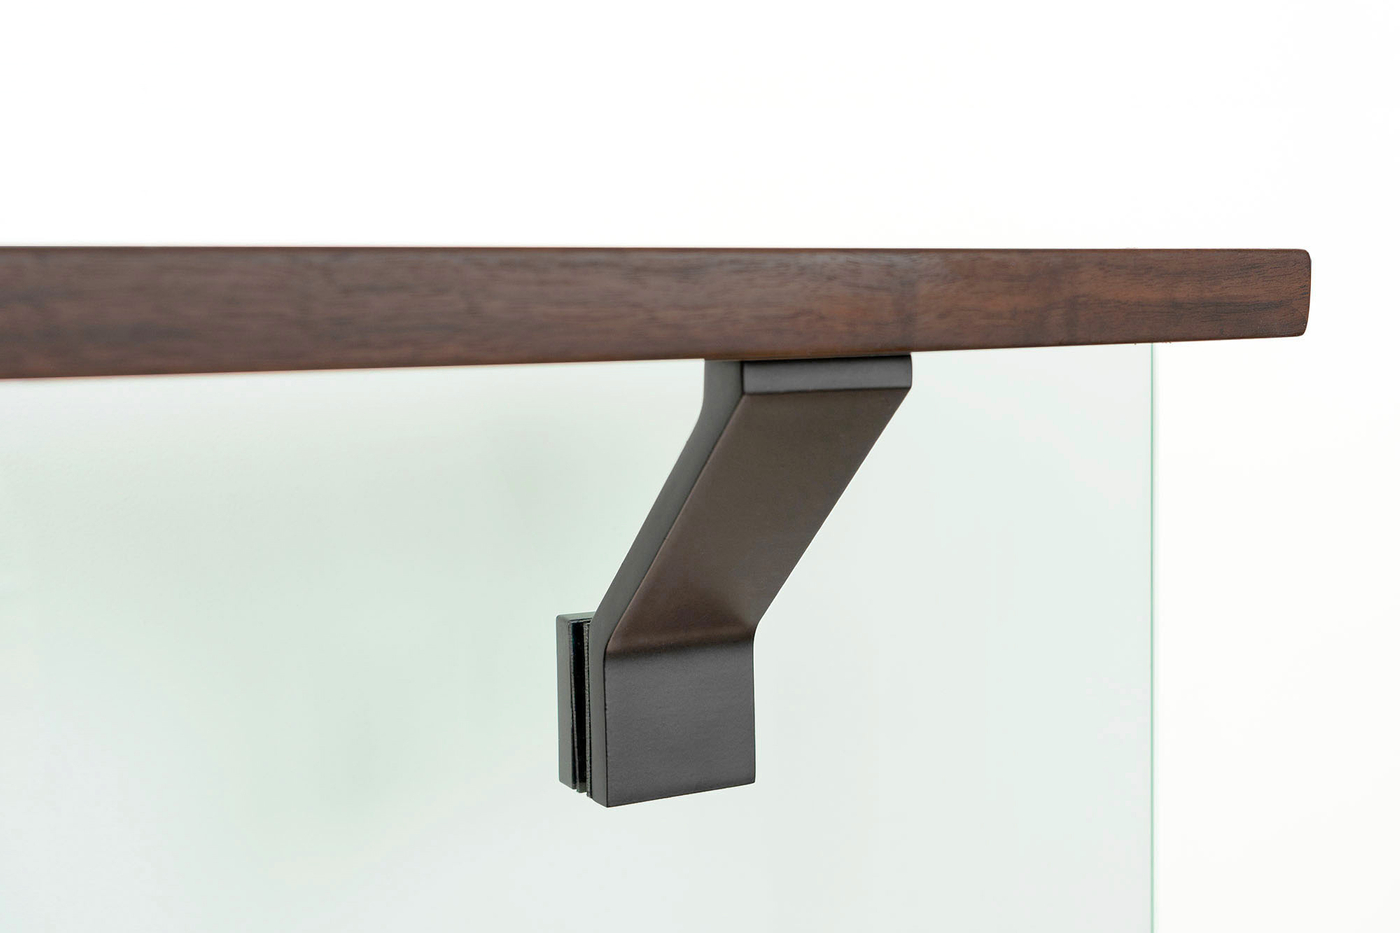 Glass-mounted-handrail-bracket